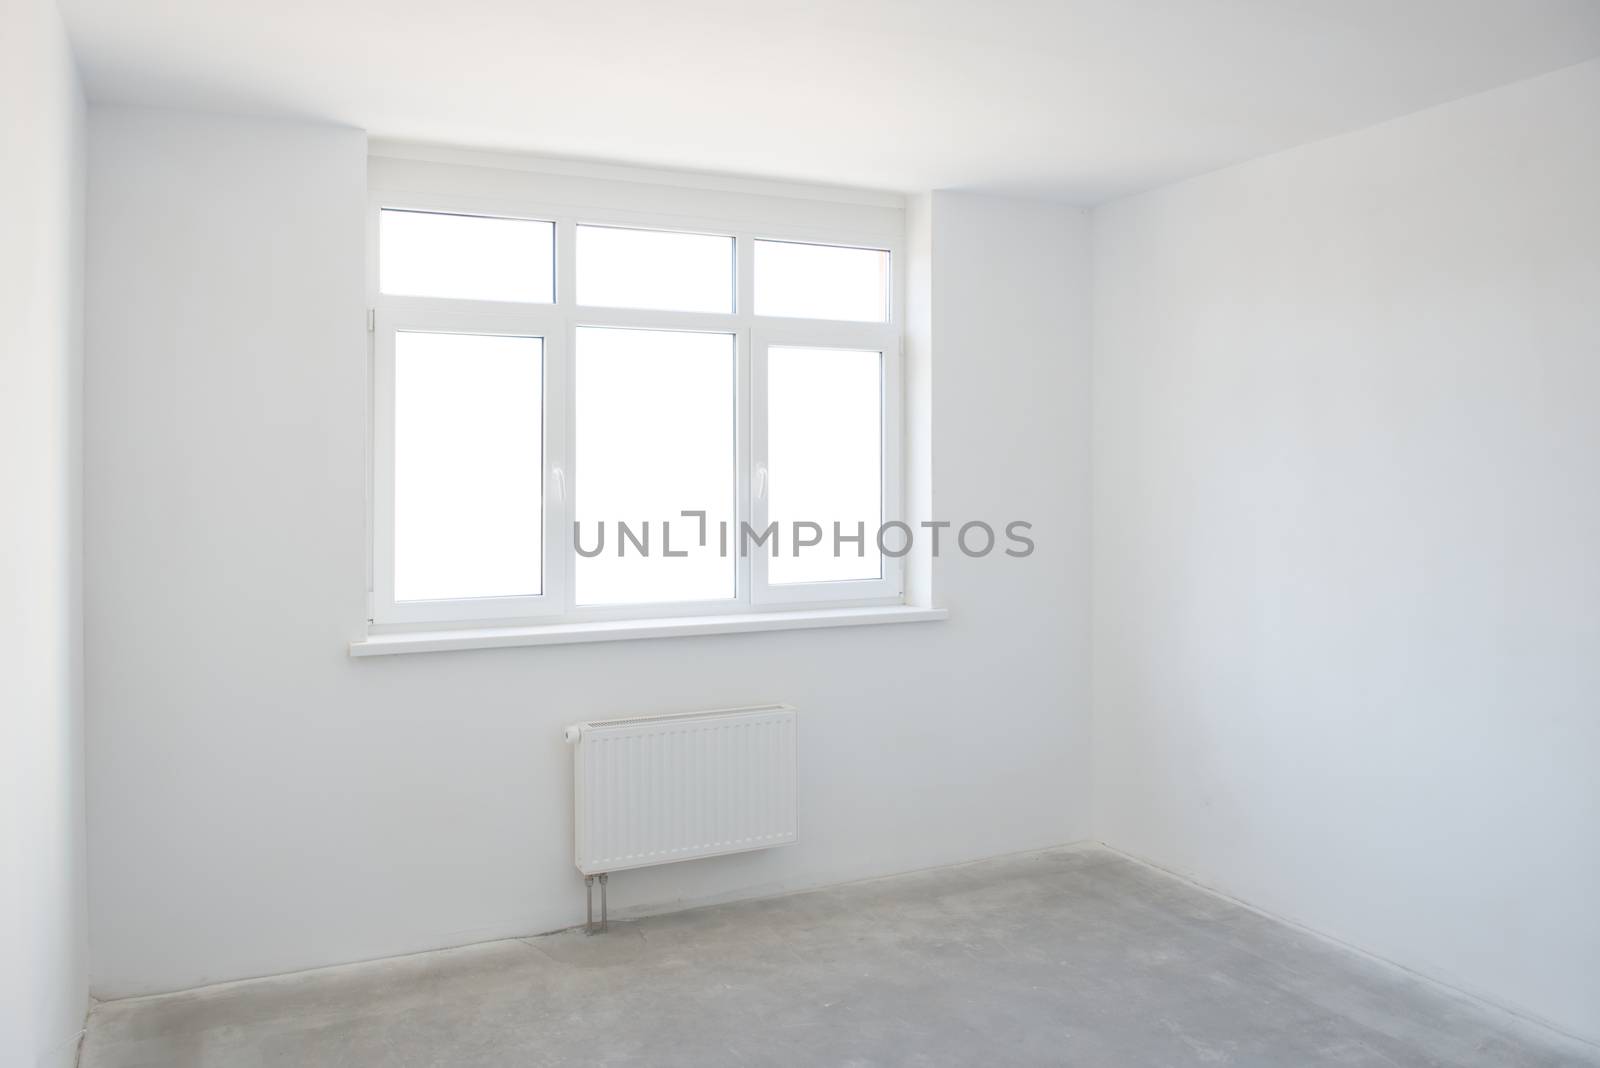 Empty white room by vapi